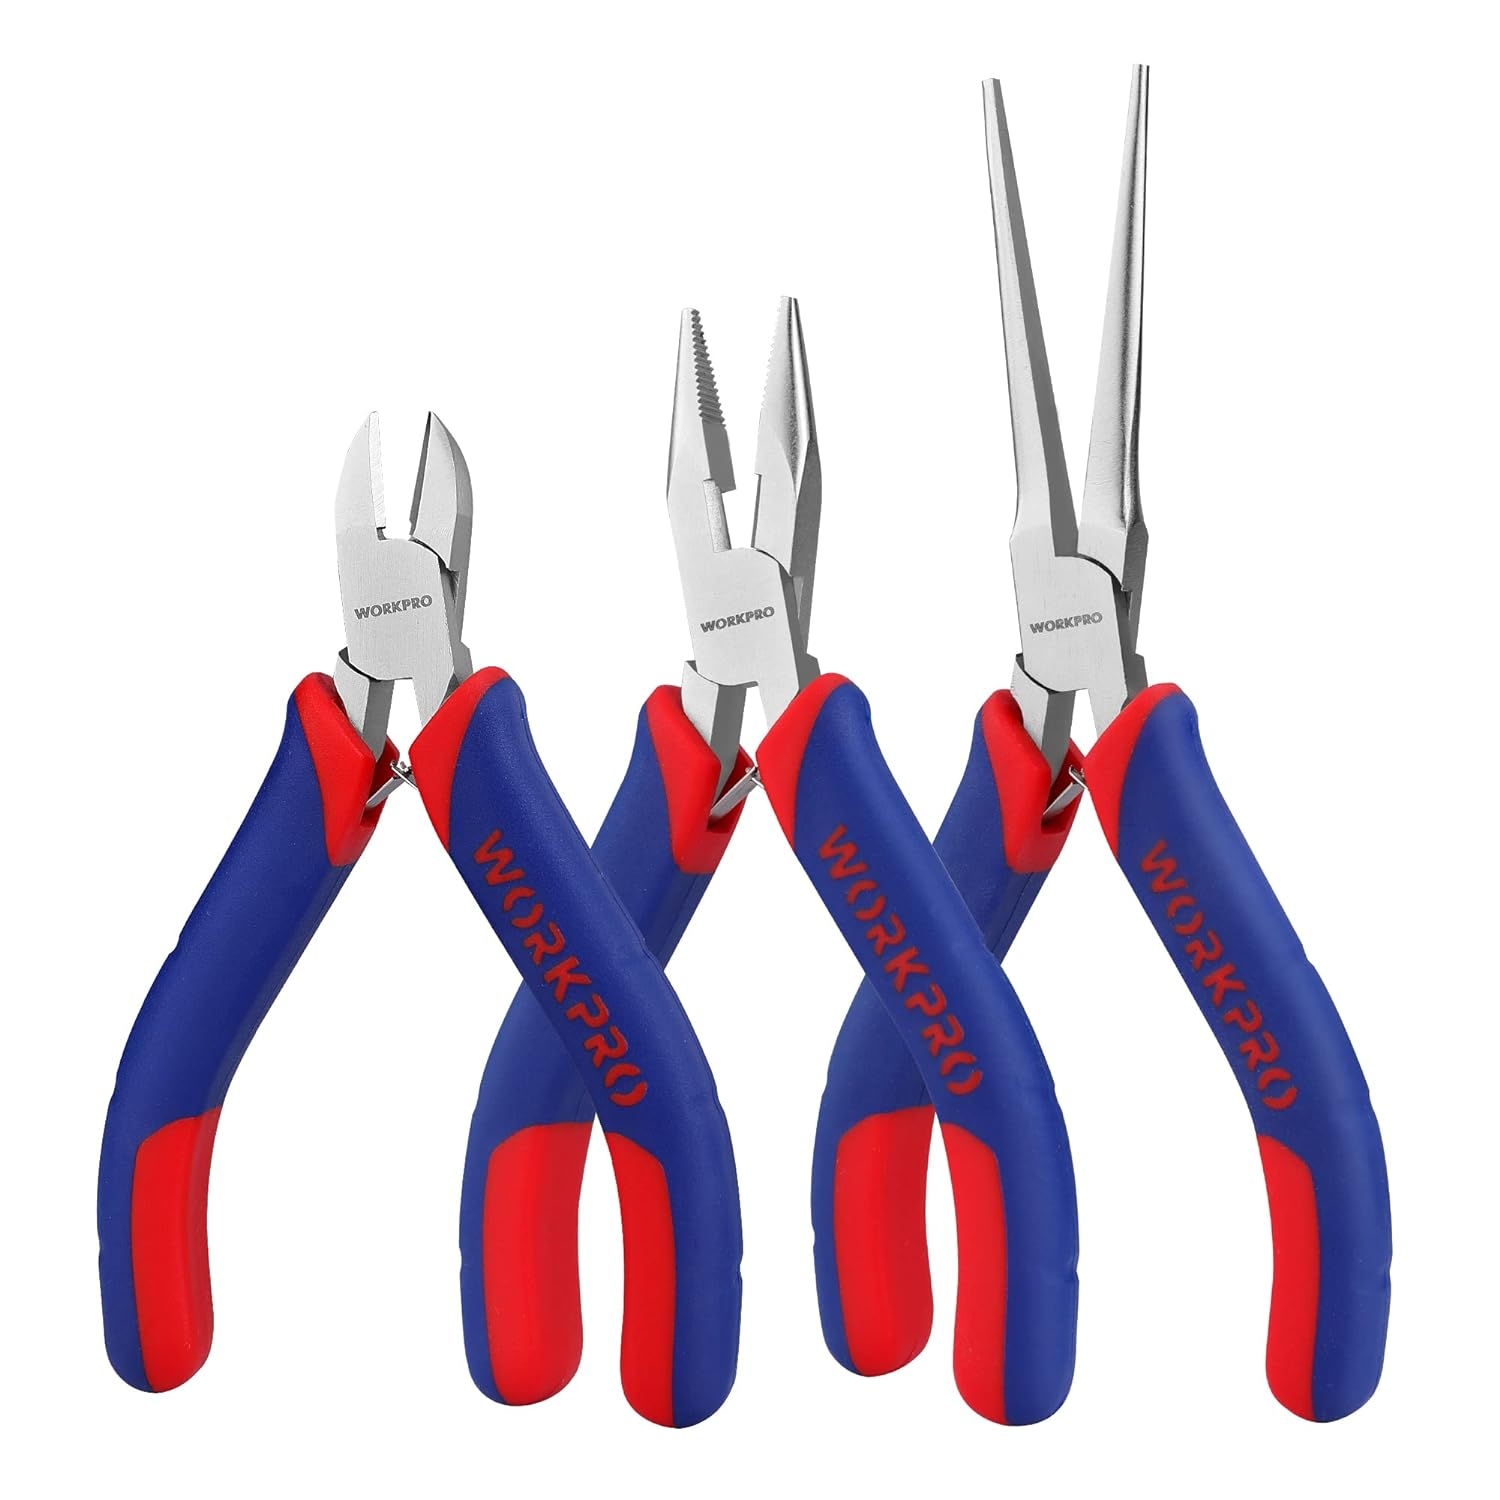 WORKPRO Mini Pliers Set, 3-Piece Small Pliers Tool Kit 4” Diagonal Plier, 6” Needle Nose Plier for Making Crafts